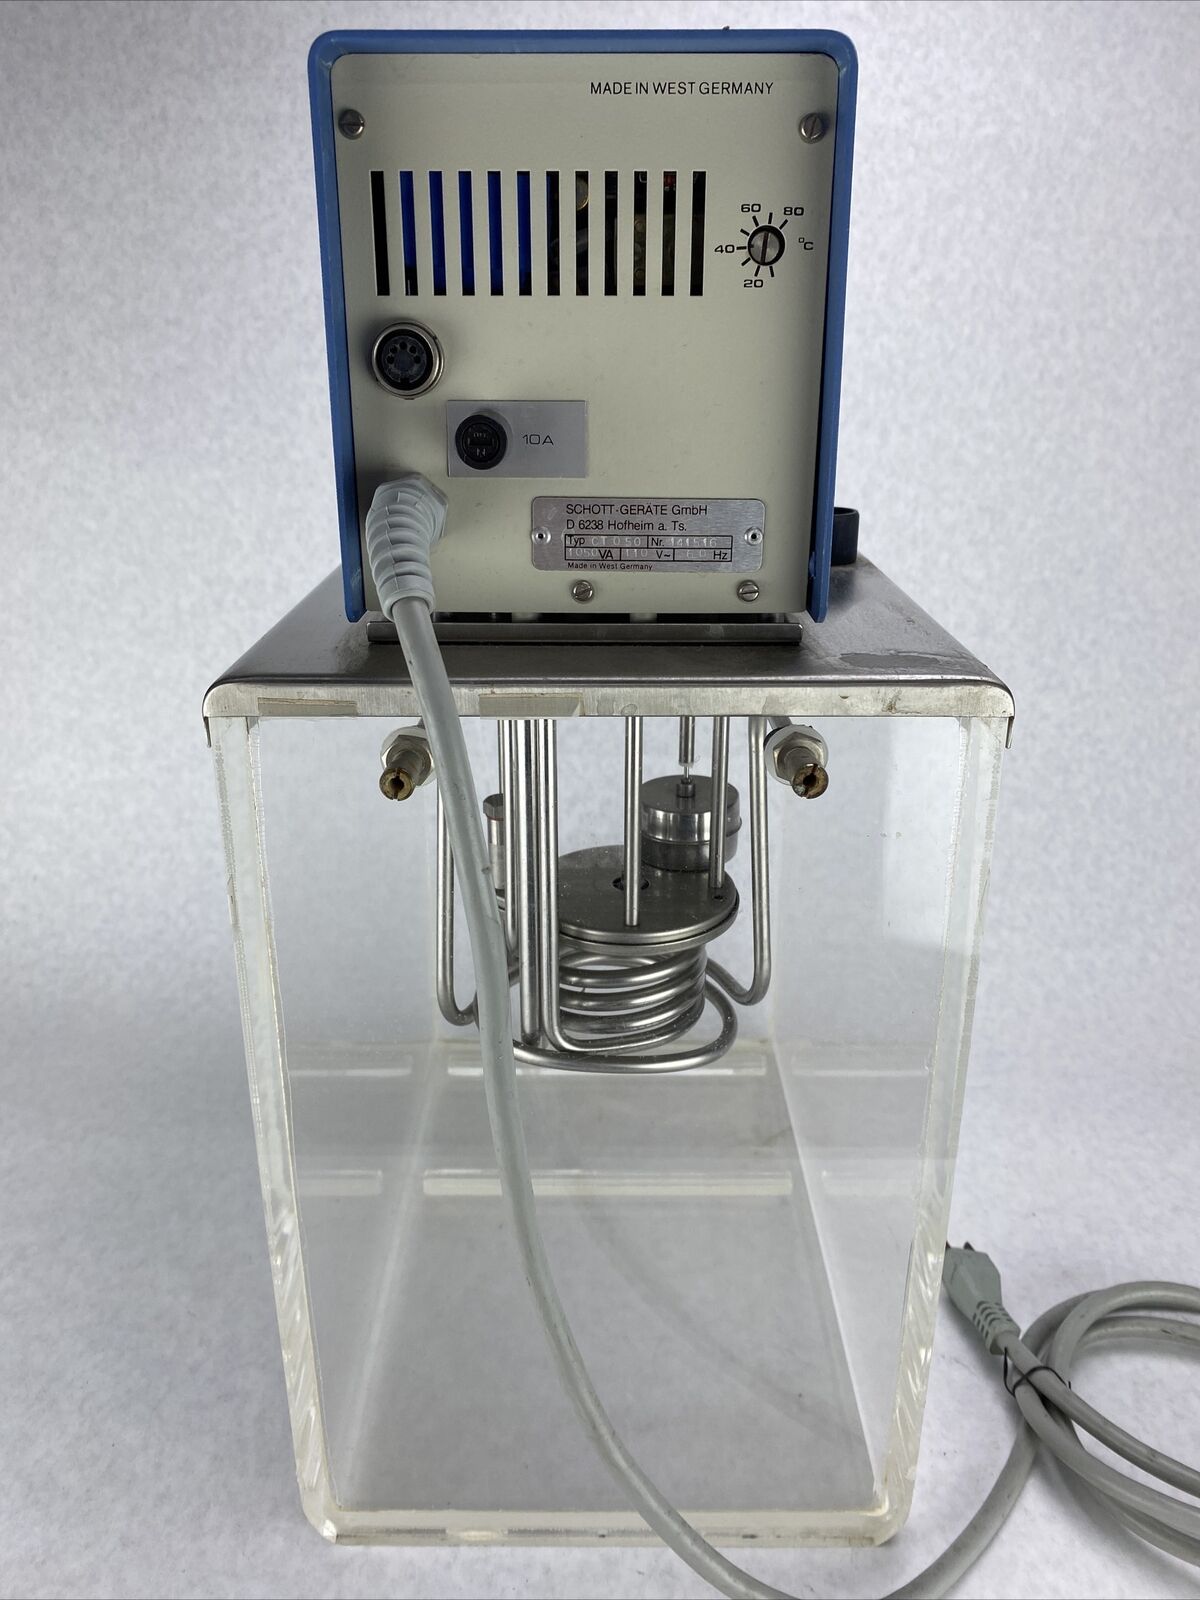 Schott Gerate CT050 Pump 110V 60Hz Heated Chilled Circulator Clear Bath